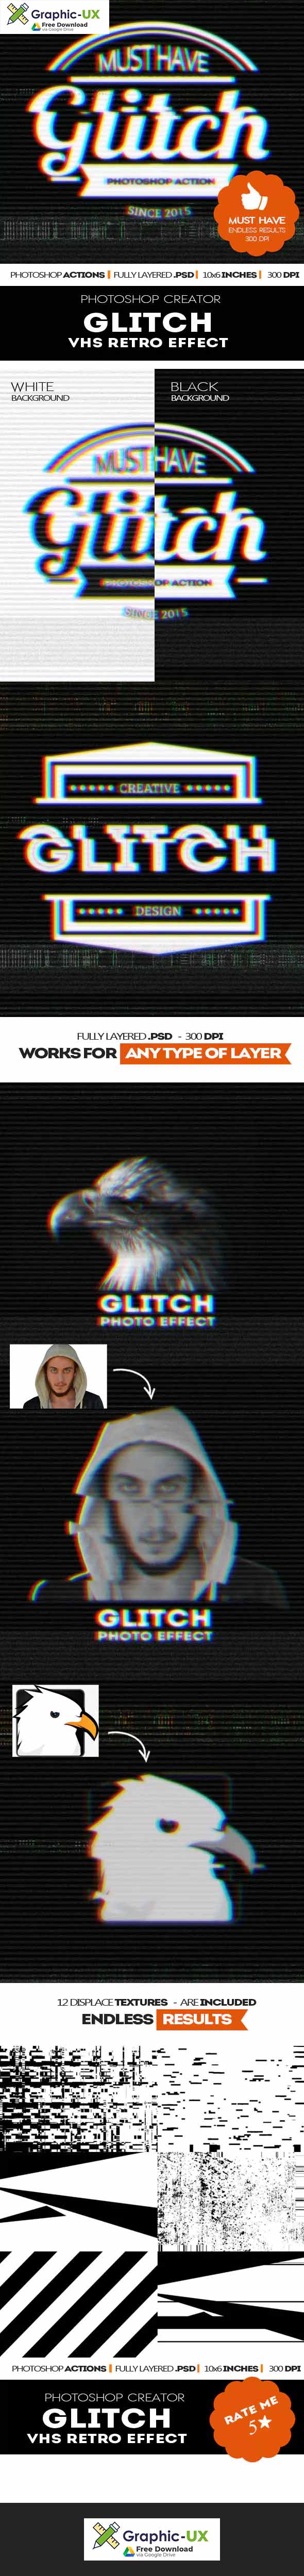 Glitch VHS Corrupt Image Effect 